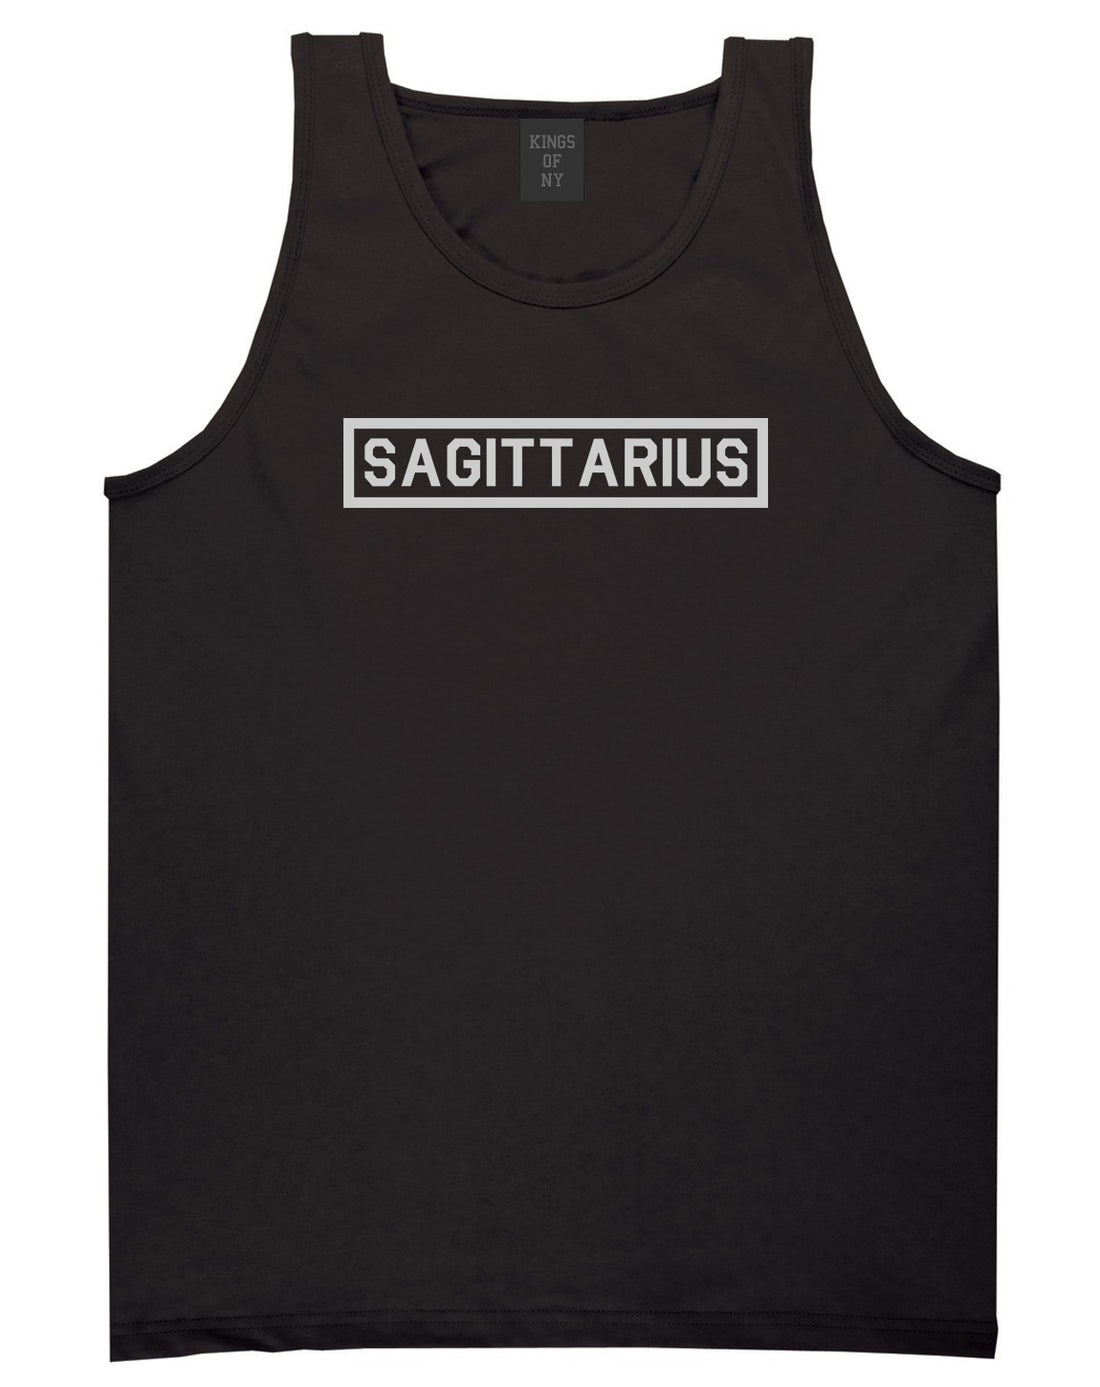 Sagittarius Horoscope Sign Mens Black Tank Top Shirt by KINGS OF NY